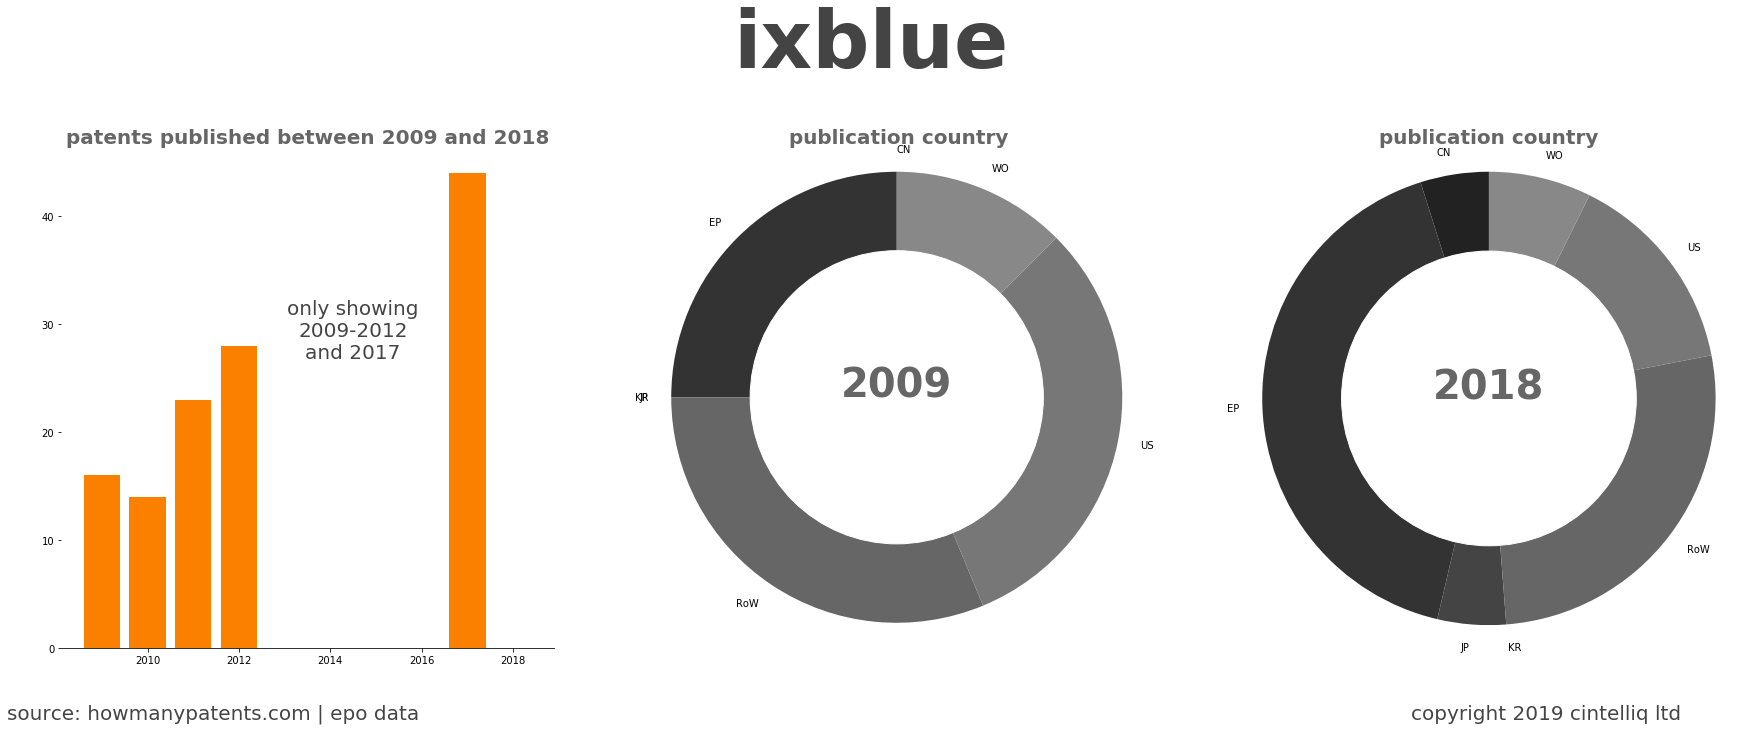 summary of patents for Ixblue